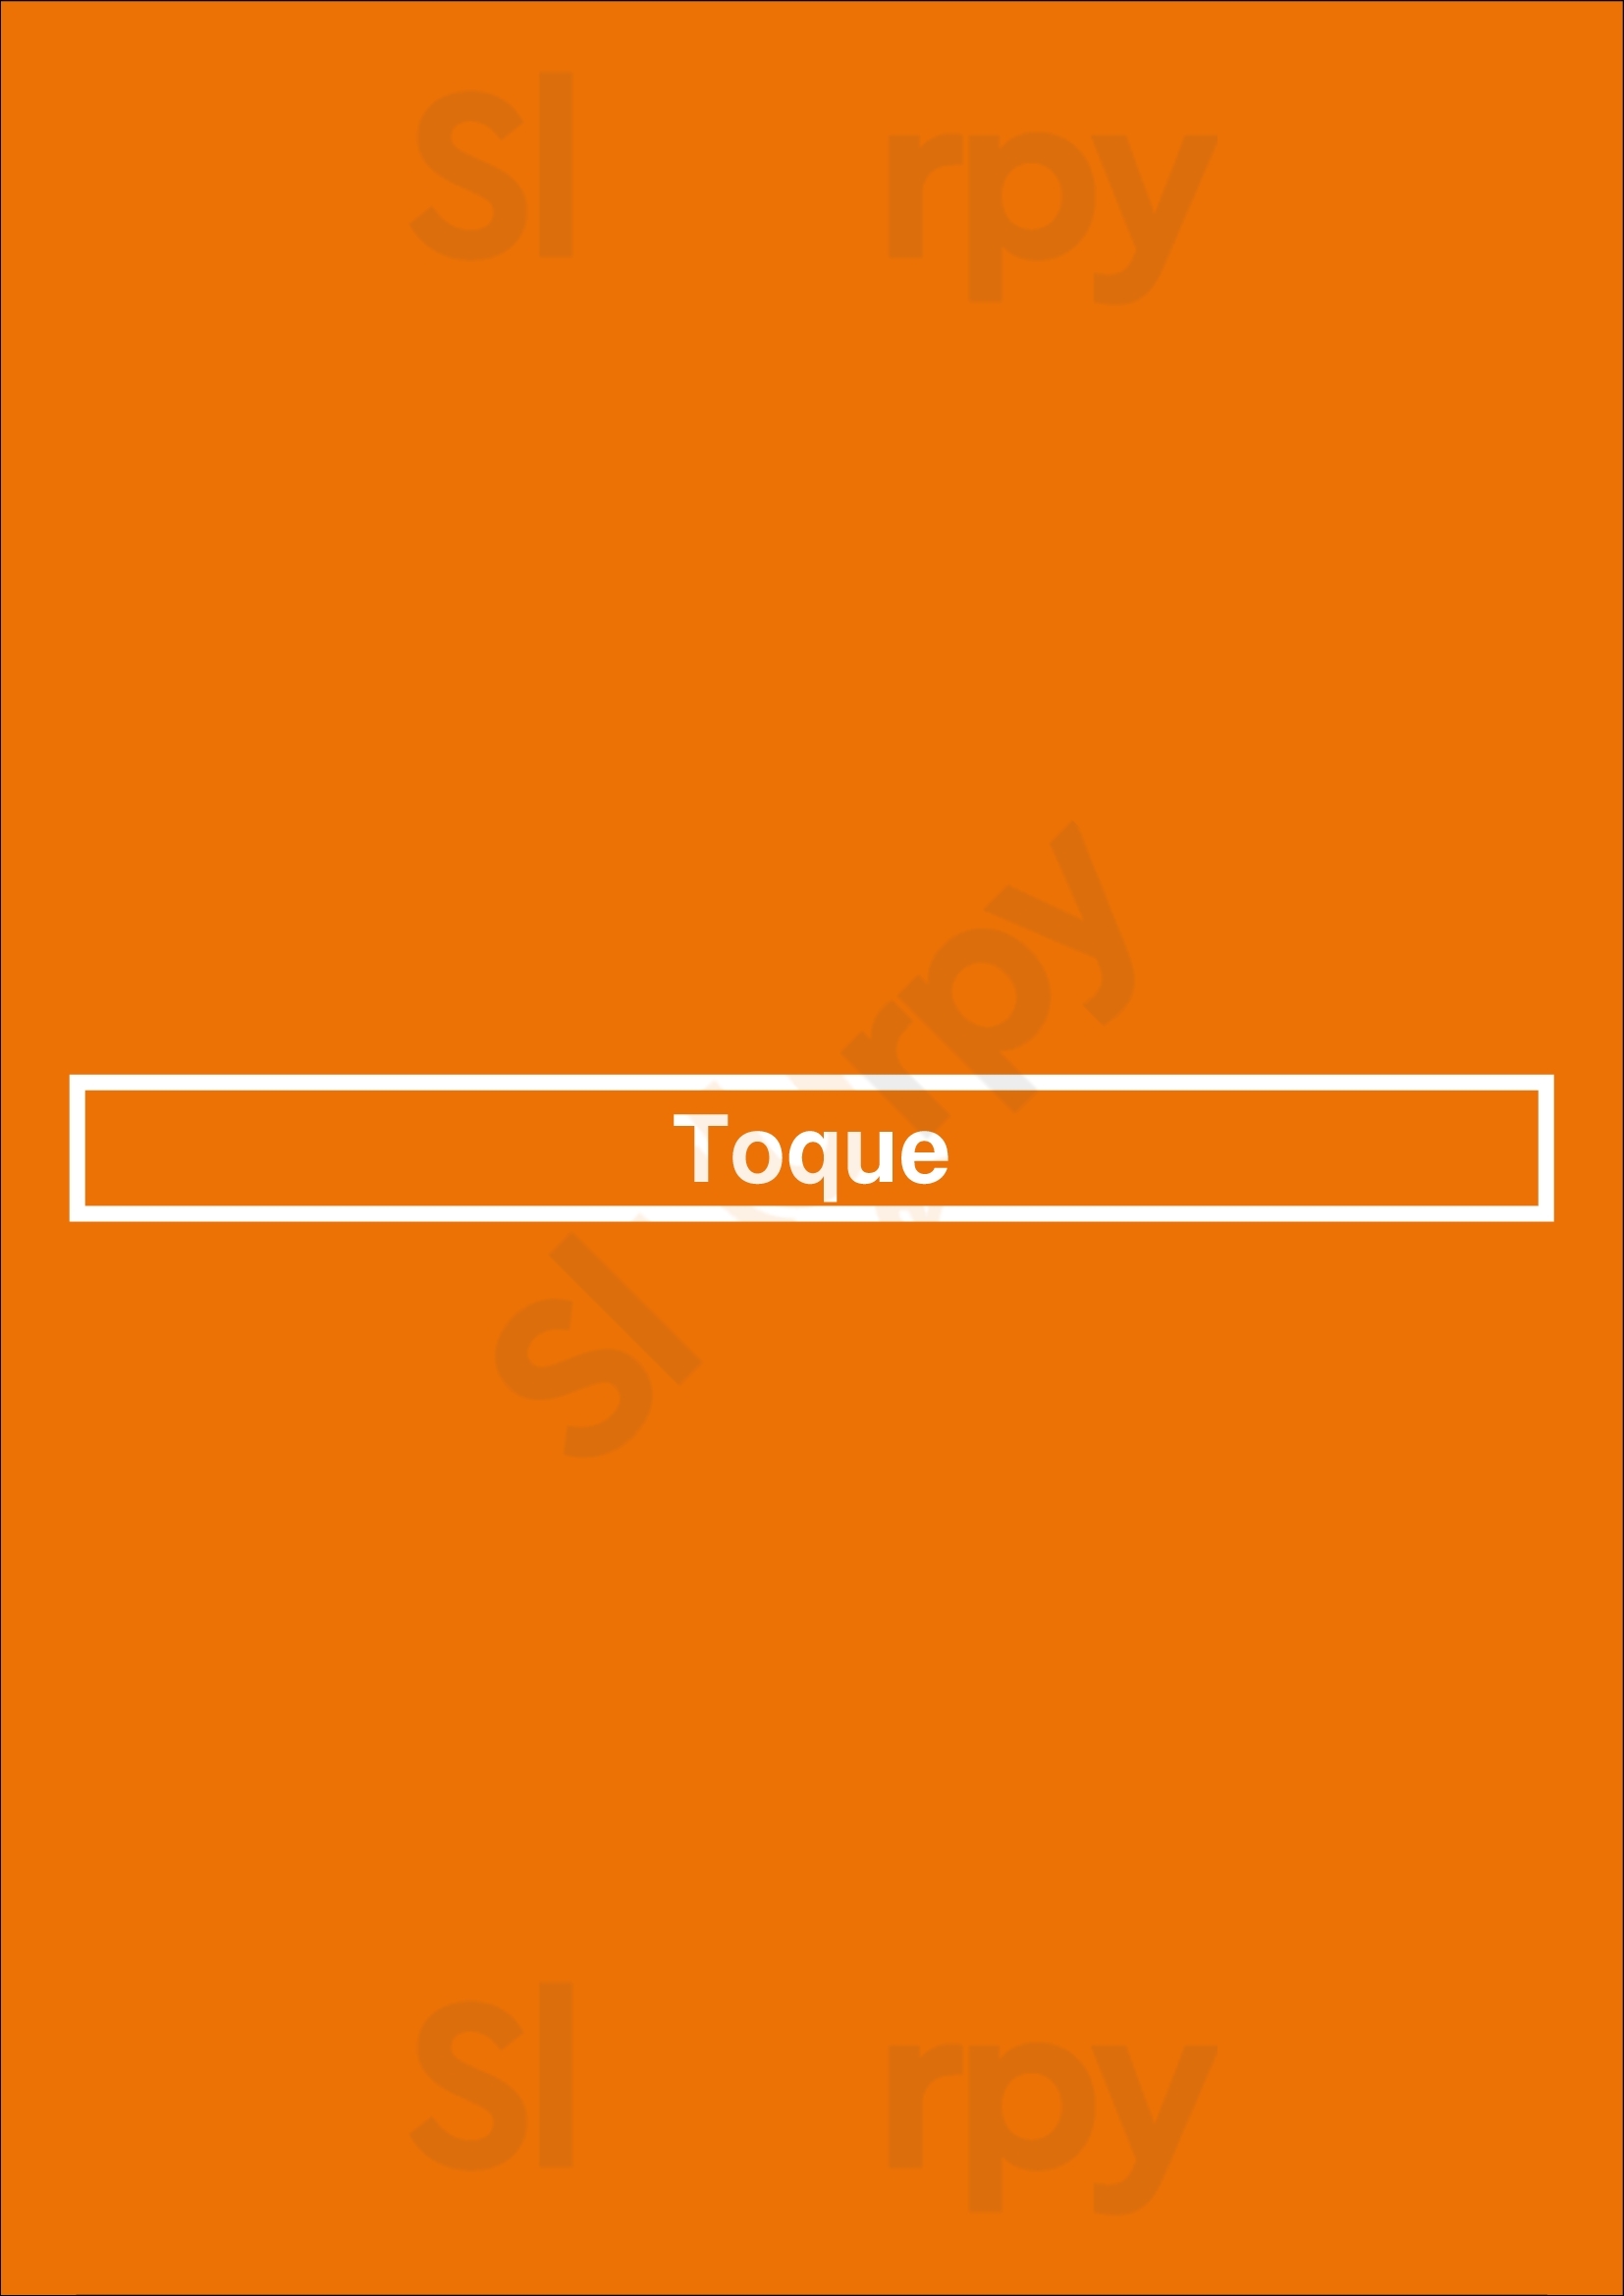 Toque Montreal Menu - 1